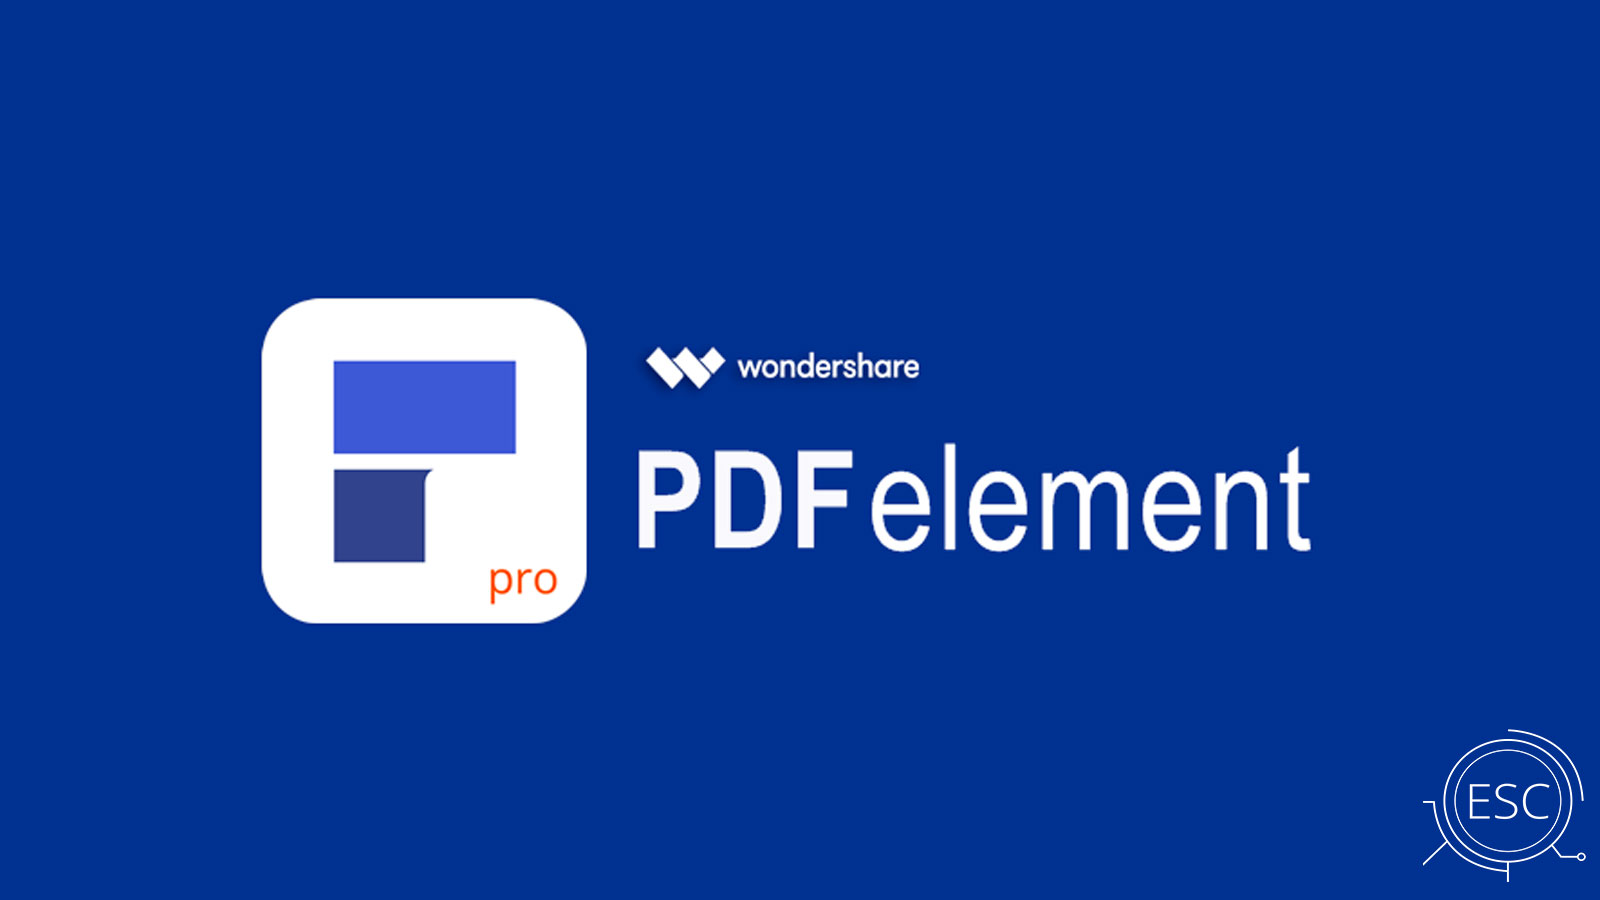 pdfelement 6 pro download free